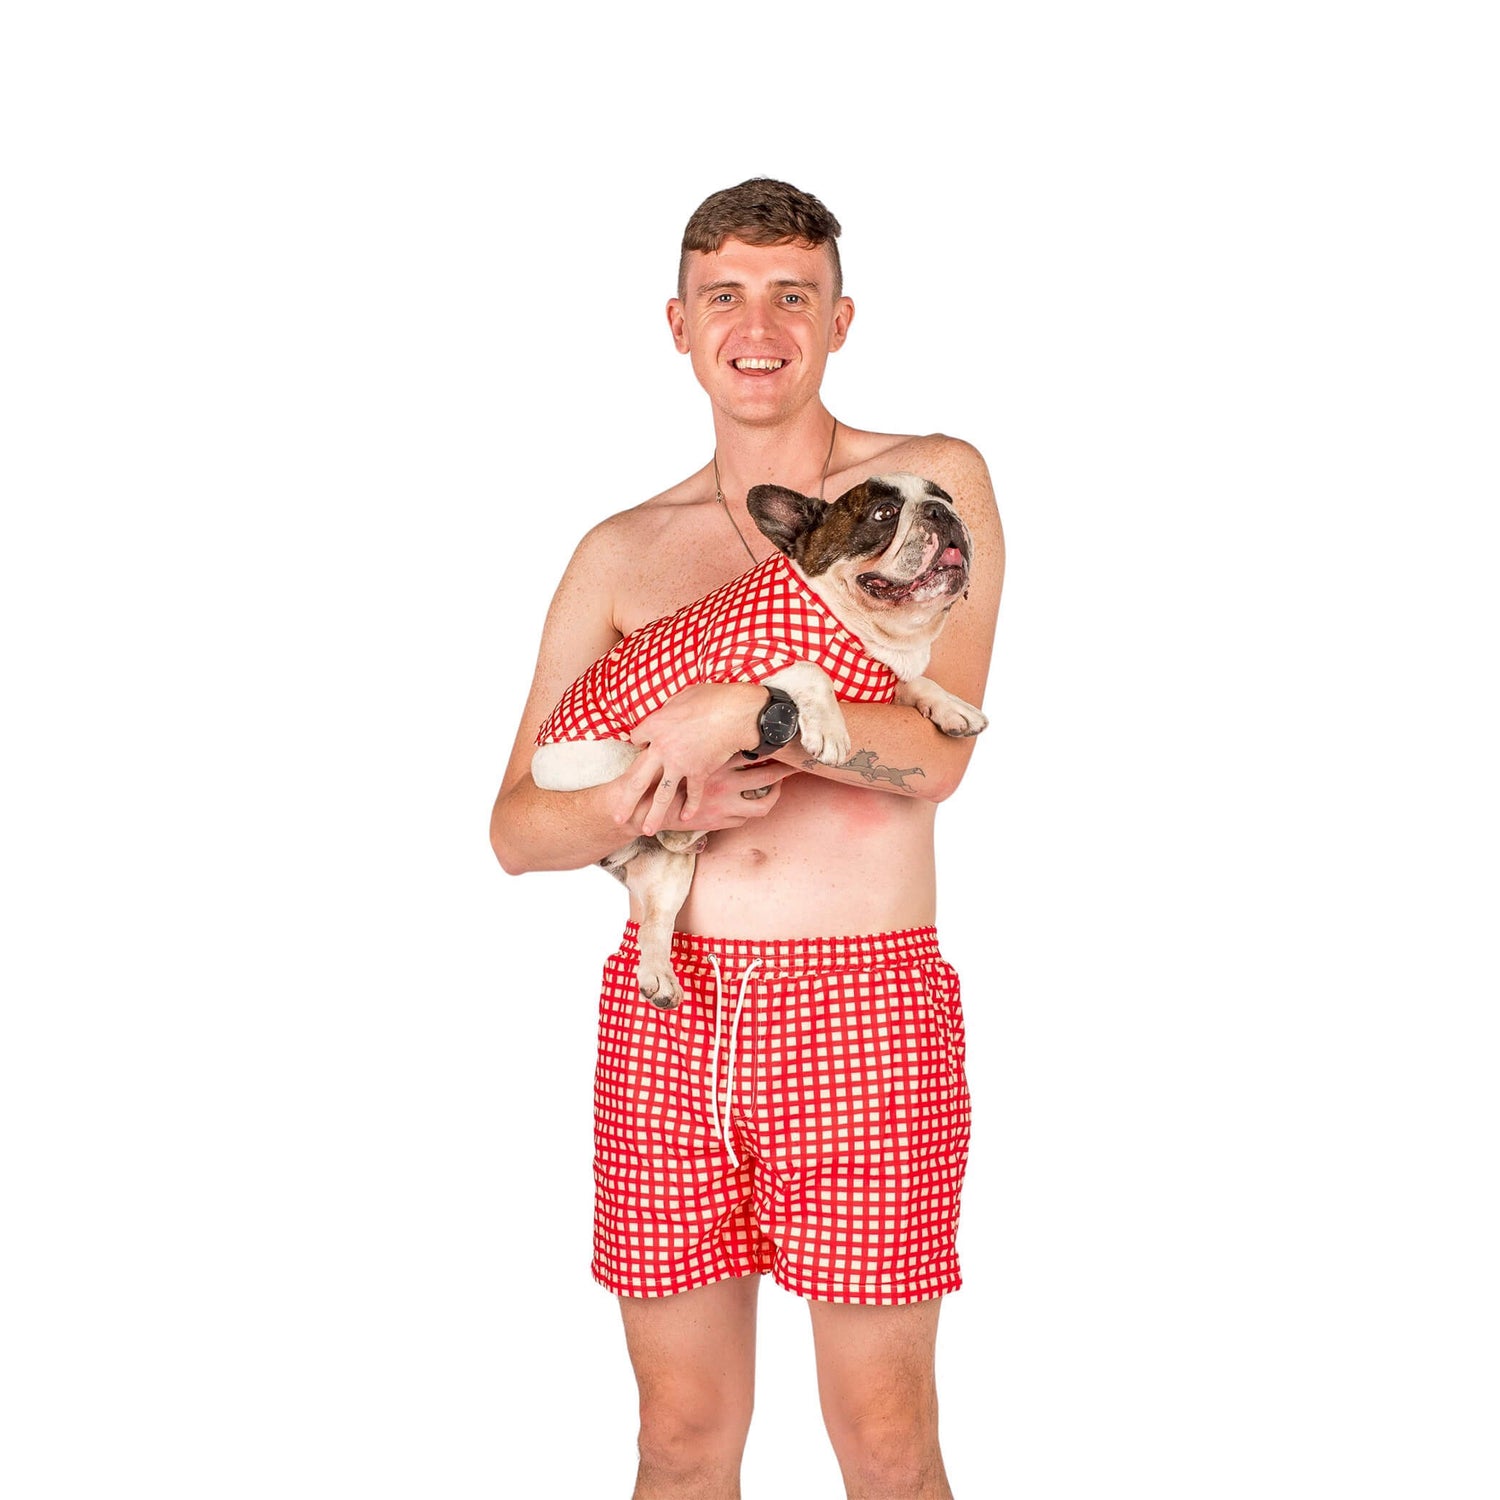 French Bulldog and Male model wearing matching Vibrant Hound Red Gingham swimwear.